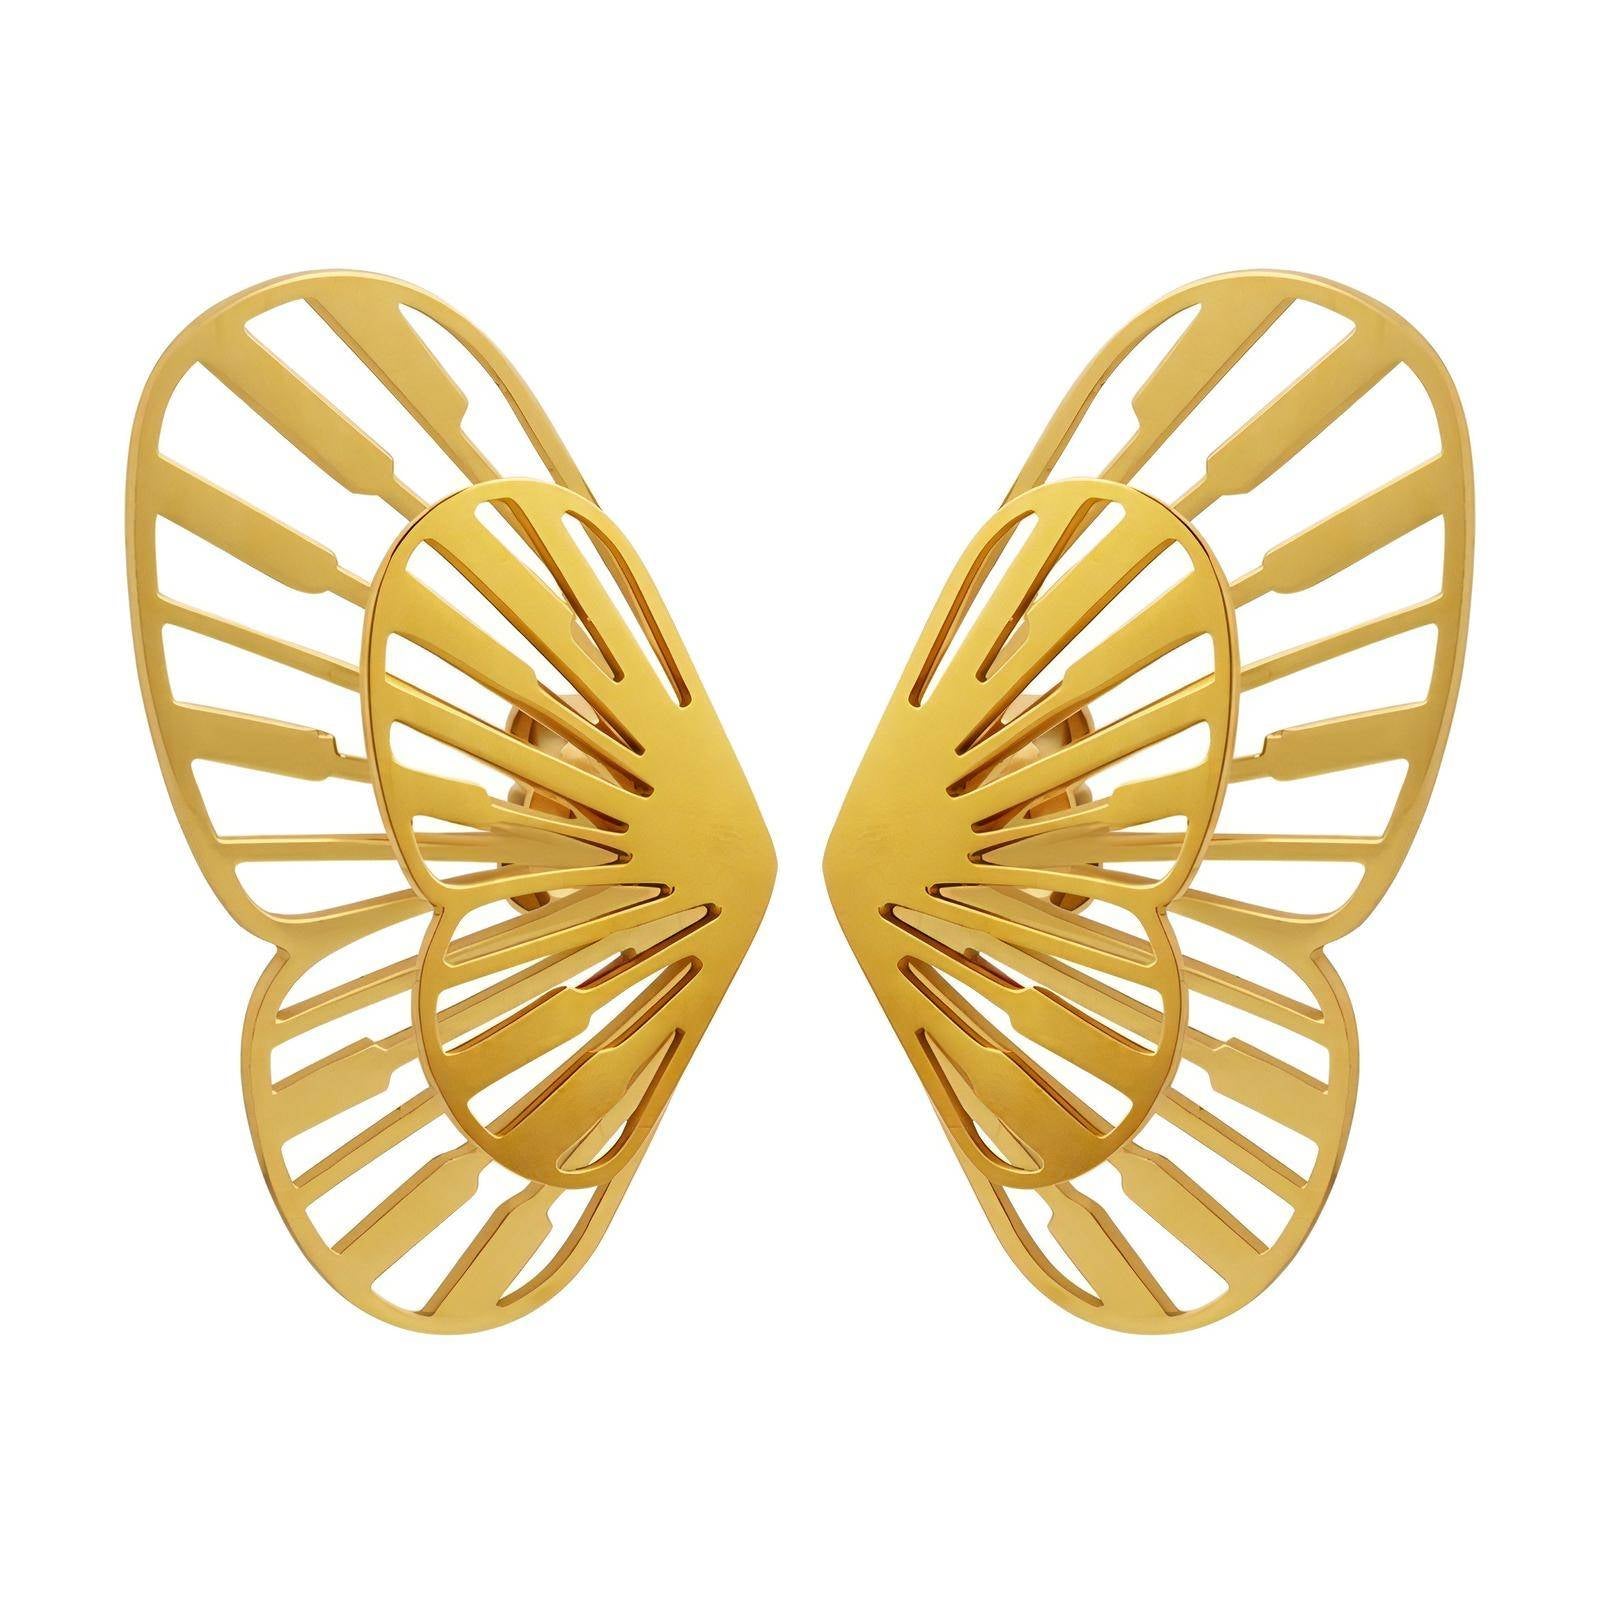 Gold plated Stainless steel Butterflies earrings